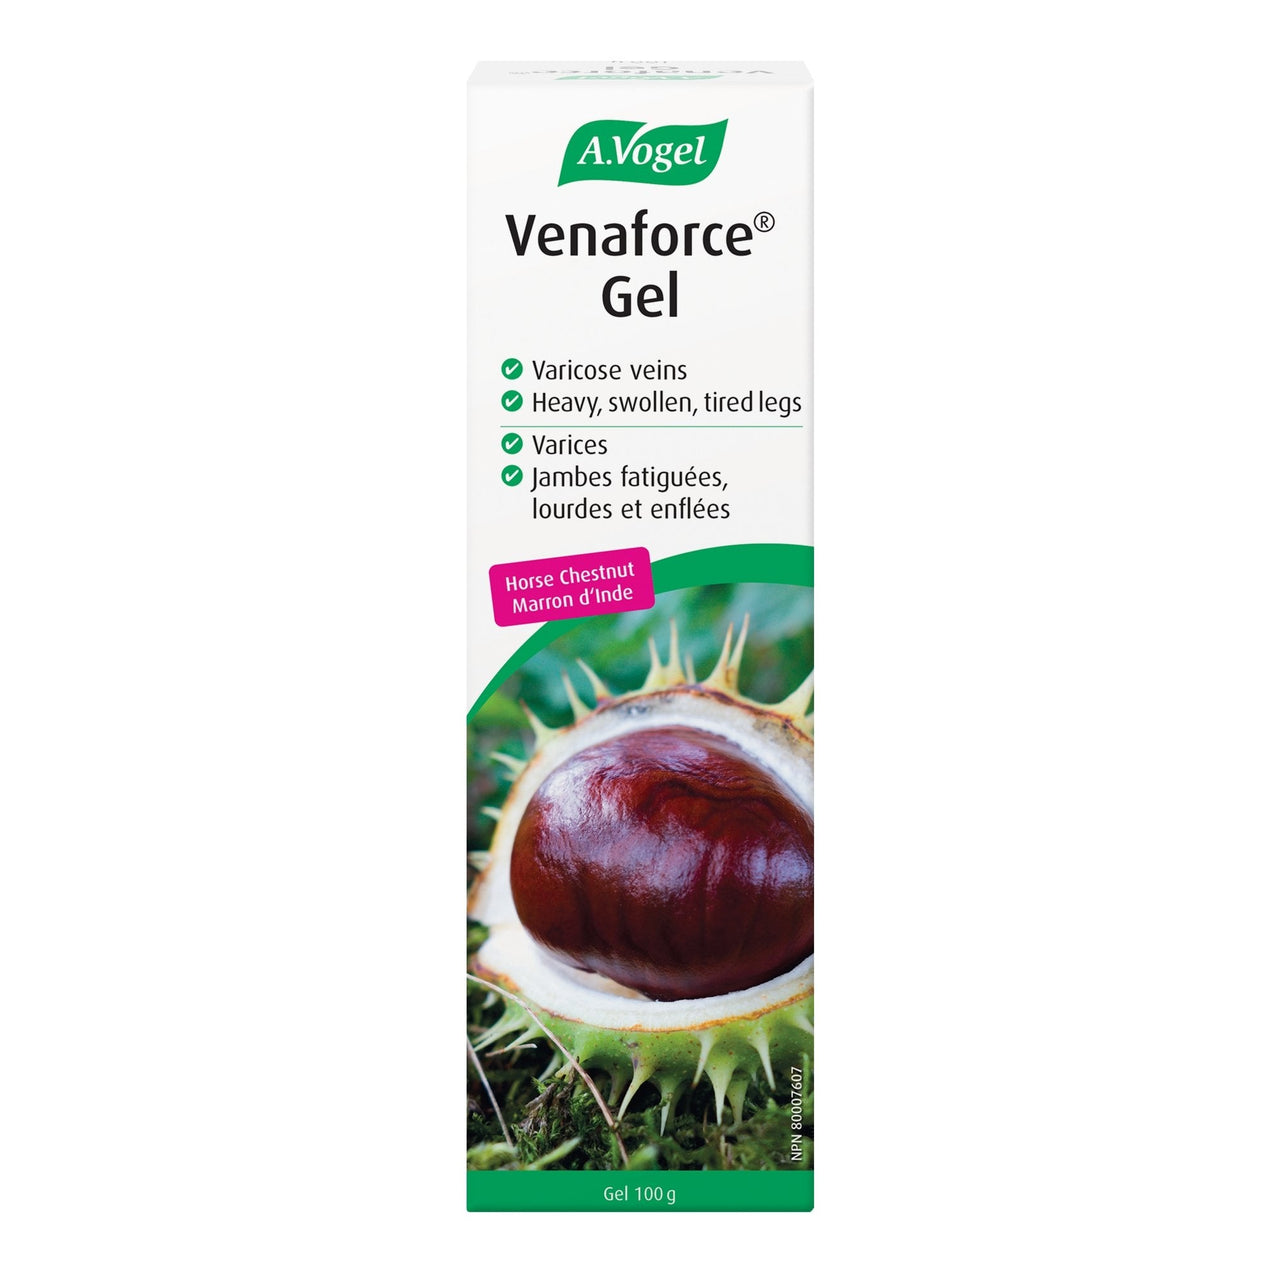 A. Vogel Venaforce® Gel - Horse chestnut 100 Grams gel for tired, aching legs - Nutrition Plus